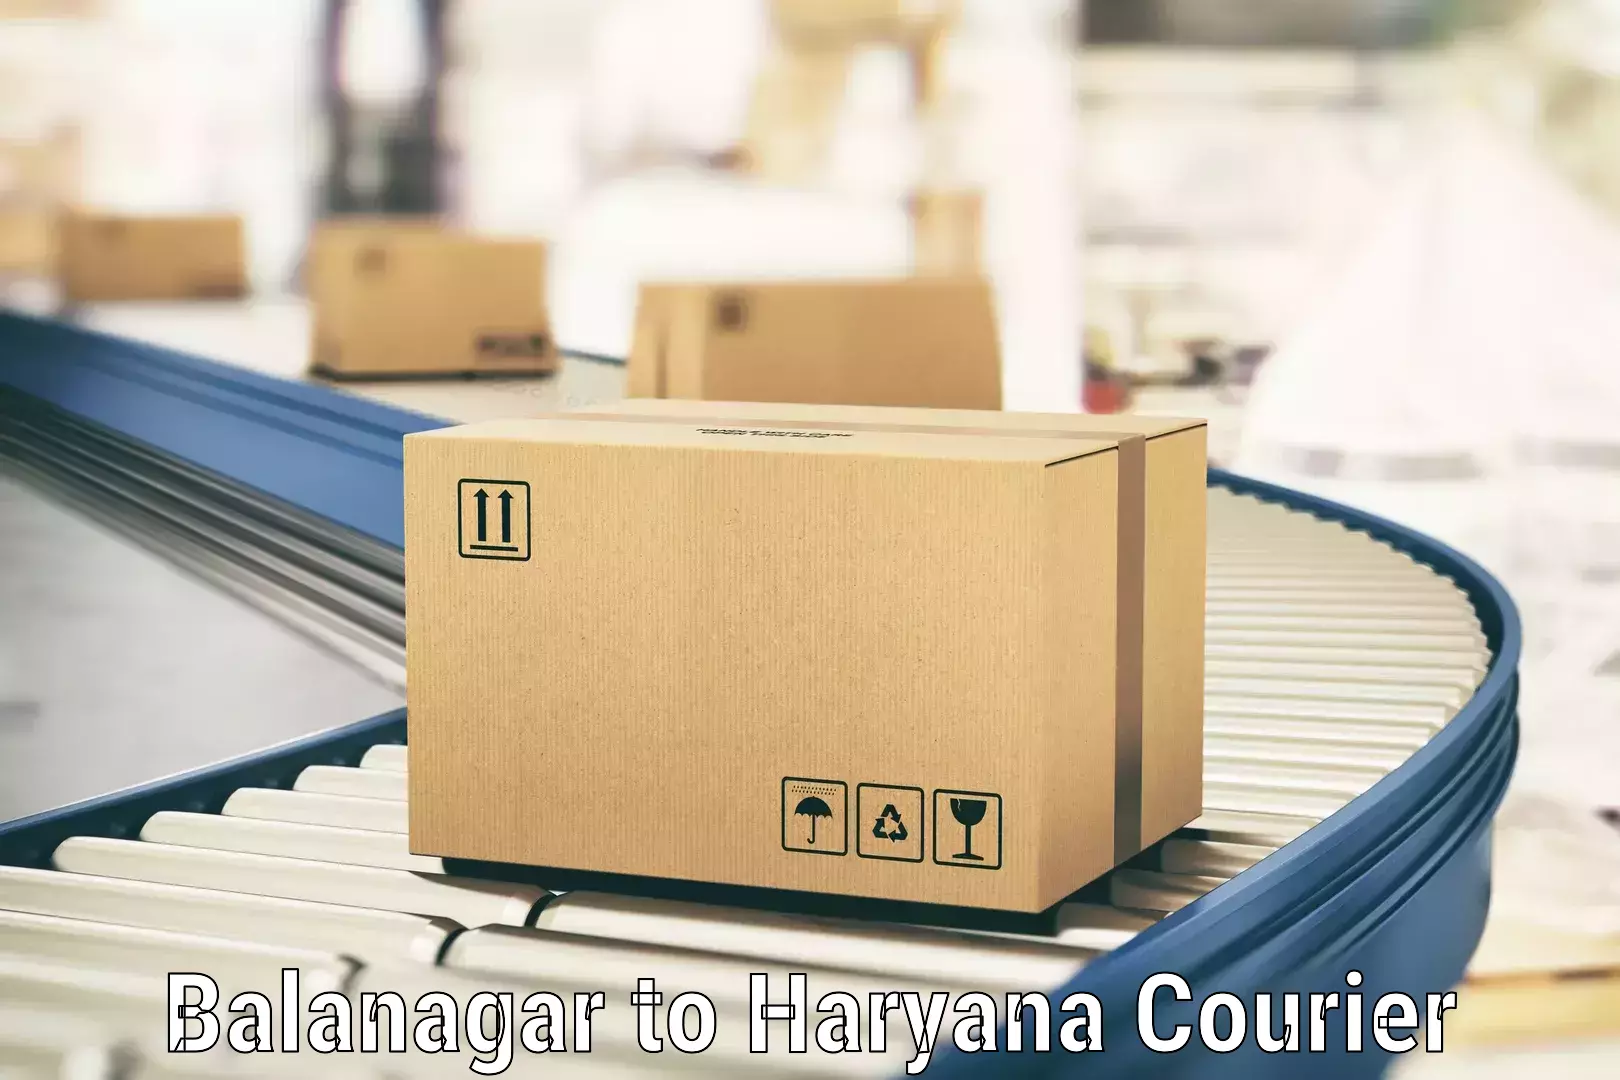 User-friendly delivery service Balanagar to Gurgaon